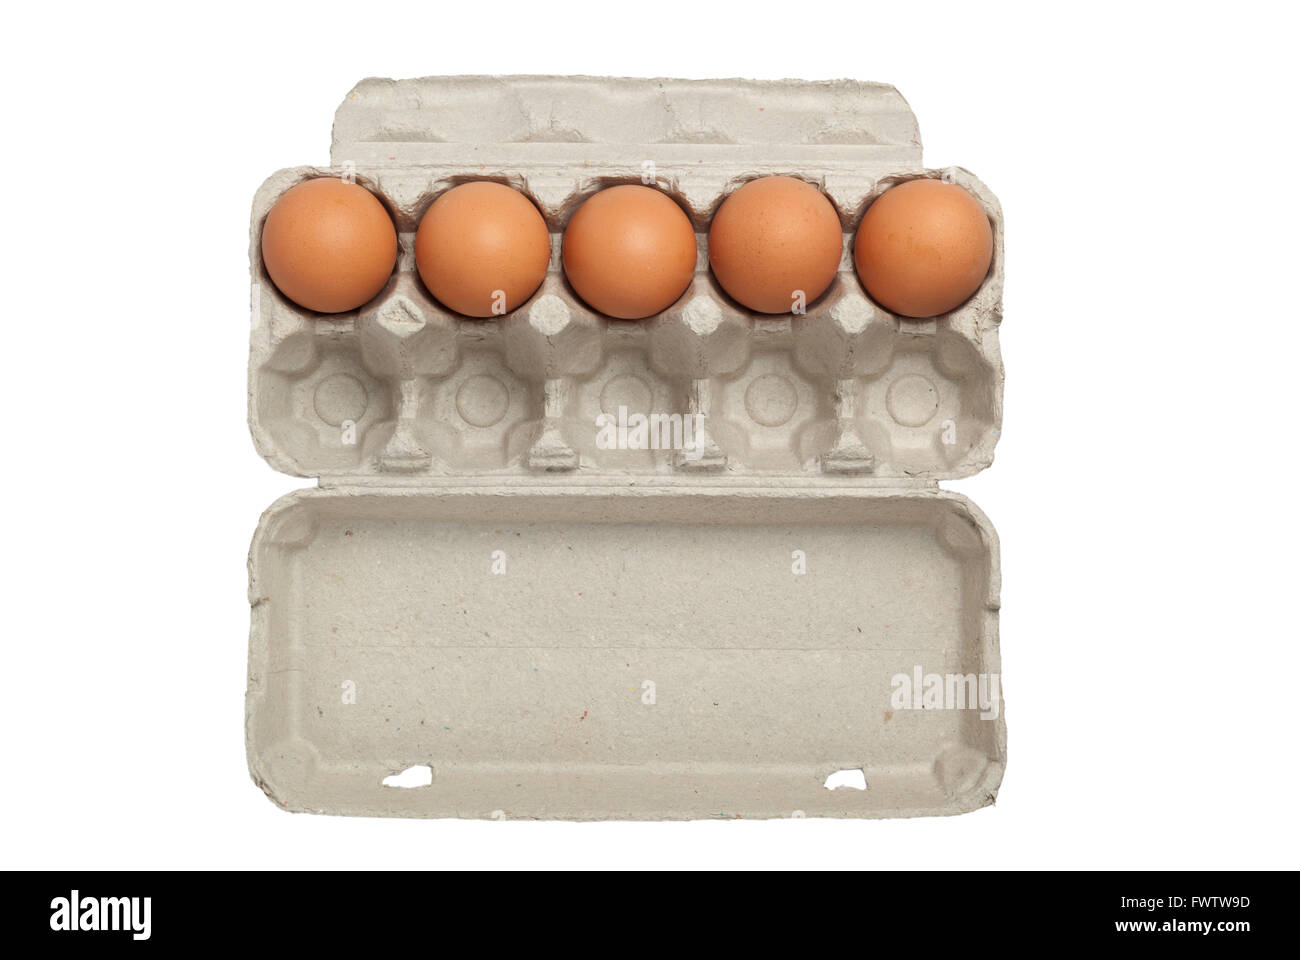 Egg carton half full or half empty of eggs isolated on white background Stock Photo